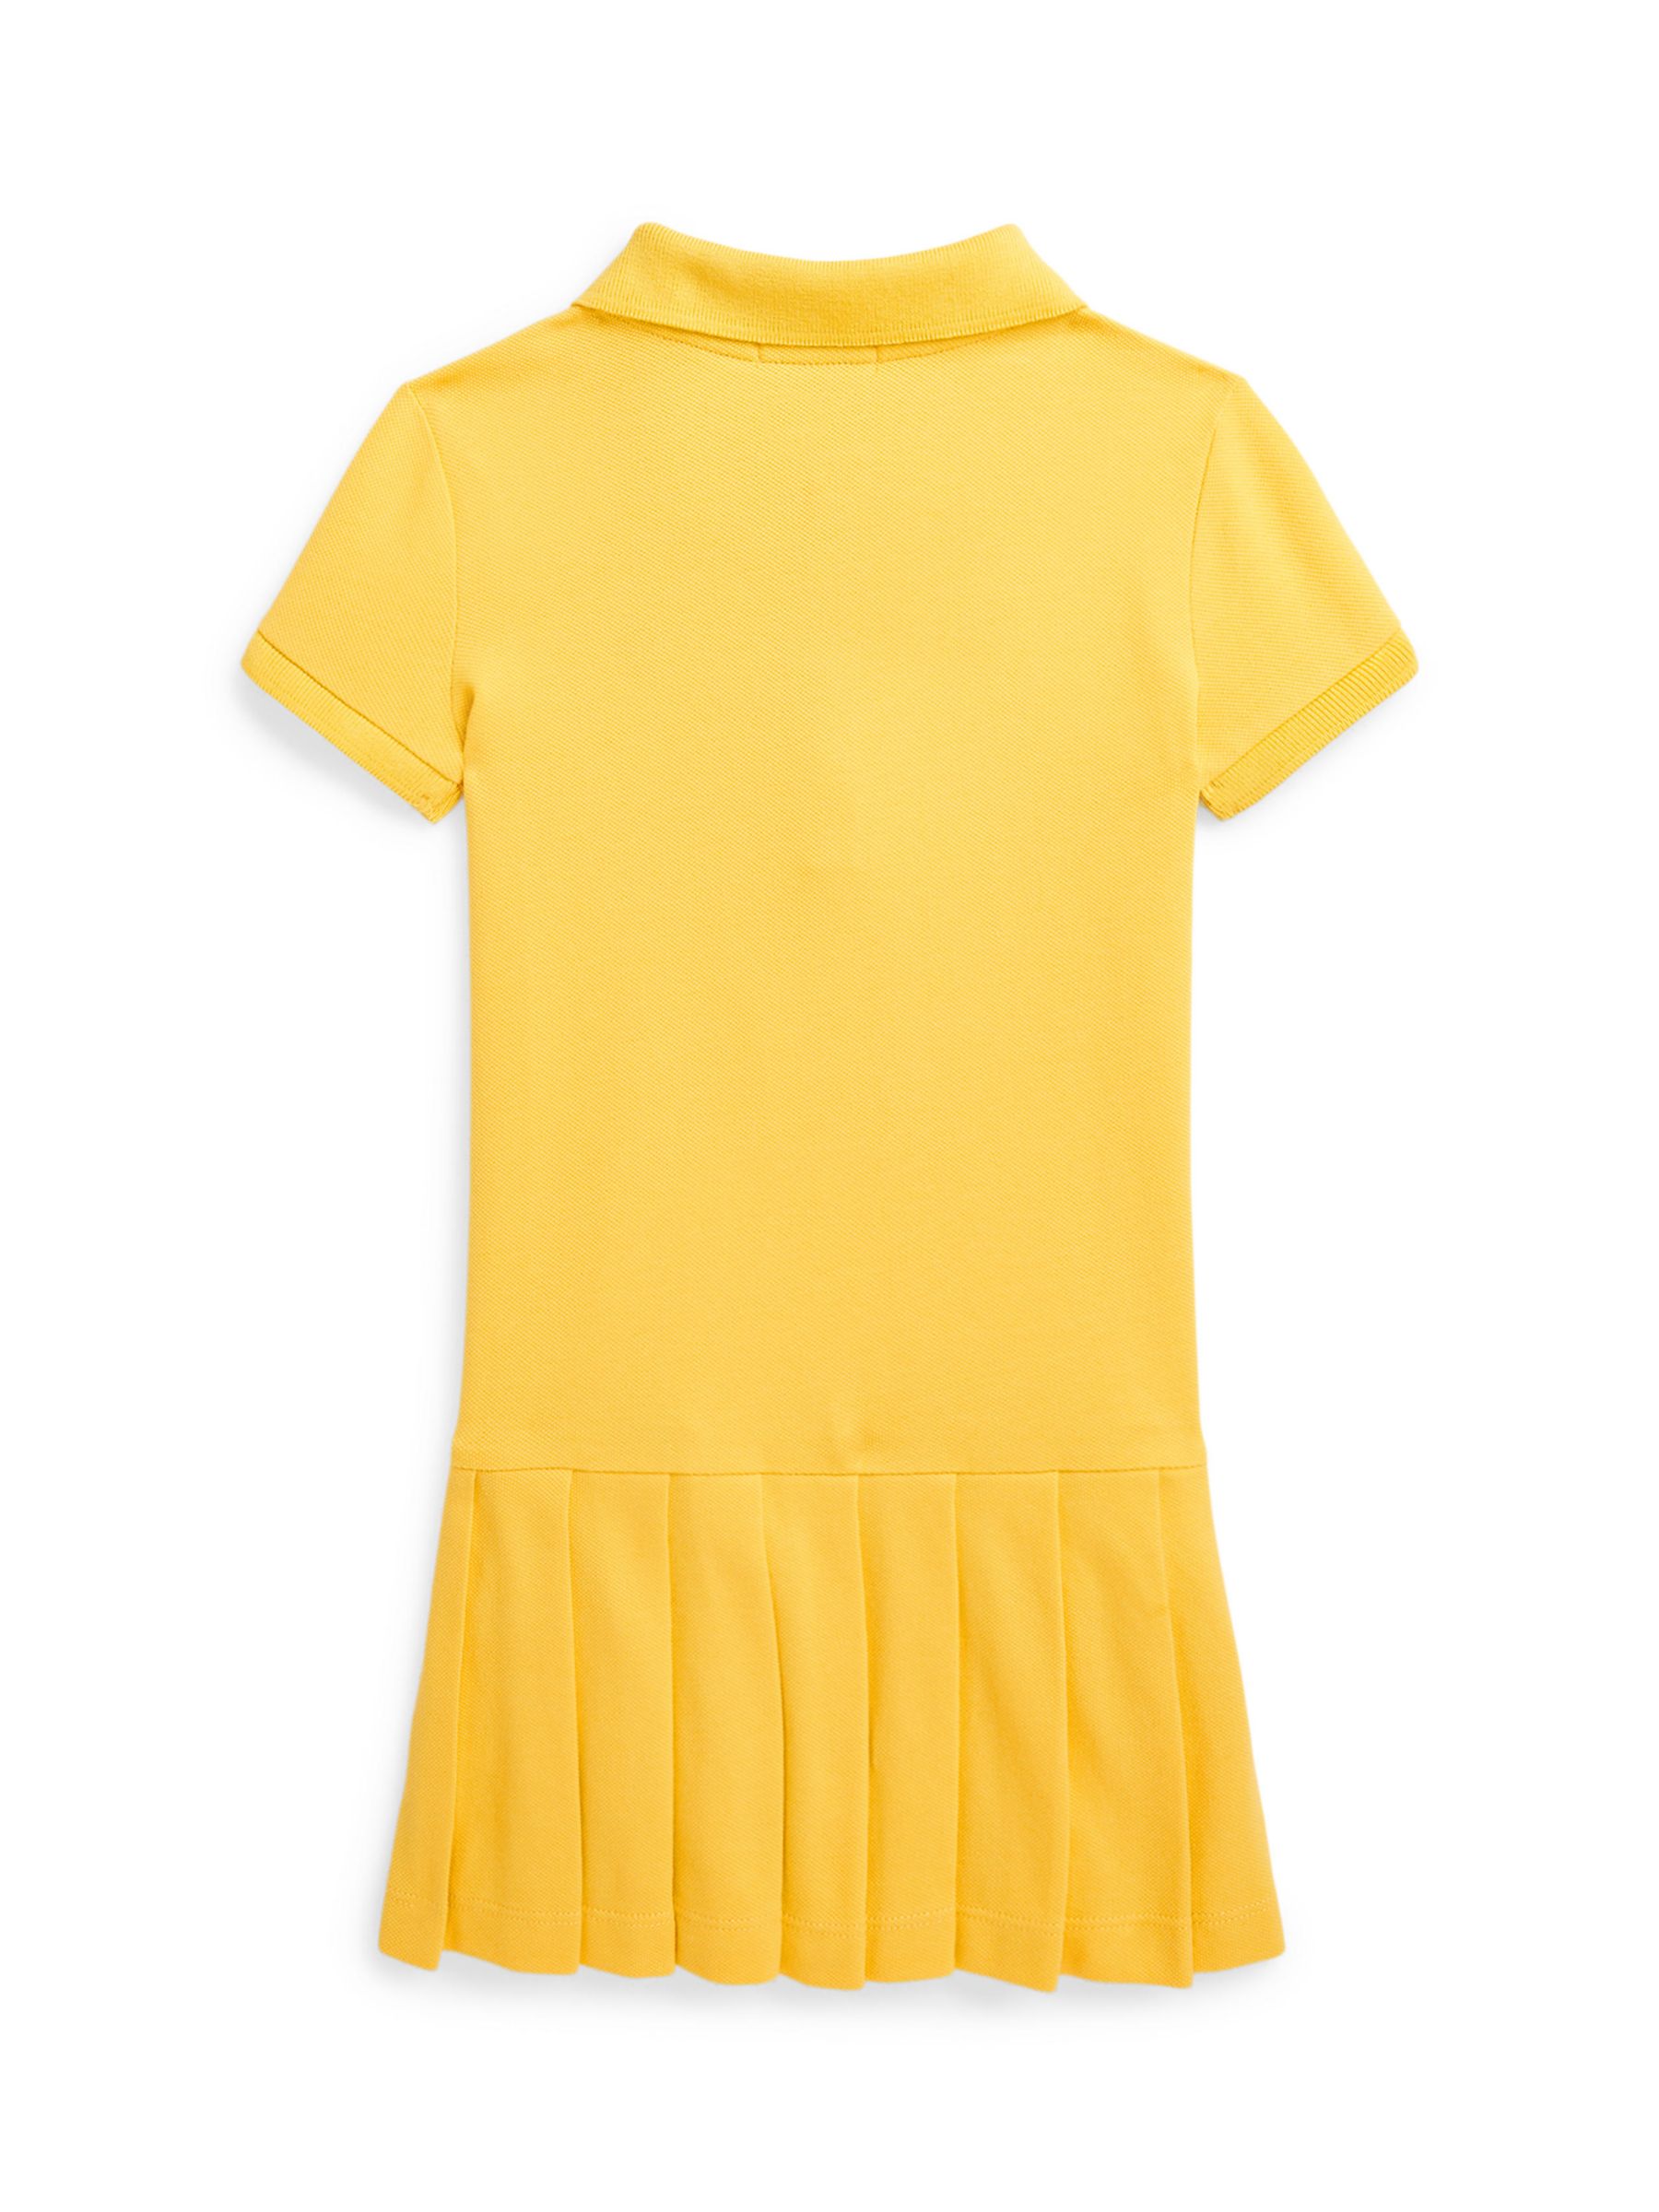 Ralph Lauren Kids' Pleated Polo Dress, Chrome Yellow, 2 years